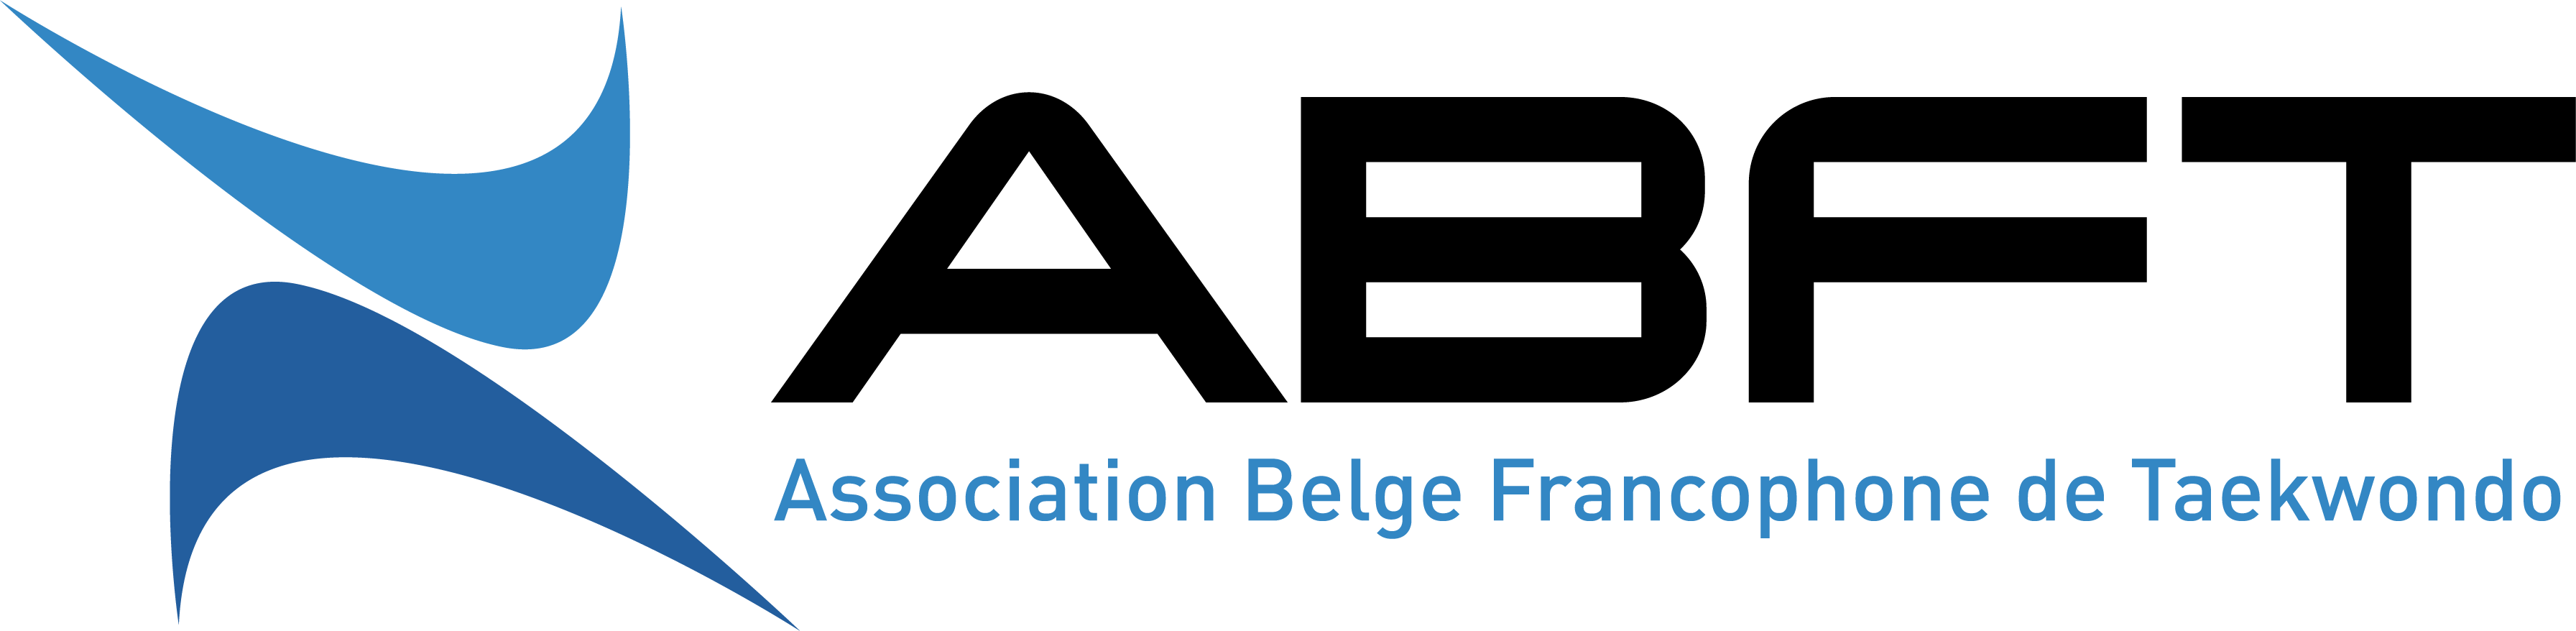 Association Belge Francophone de Taekwondo